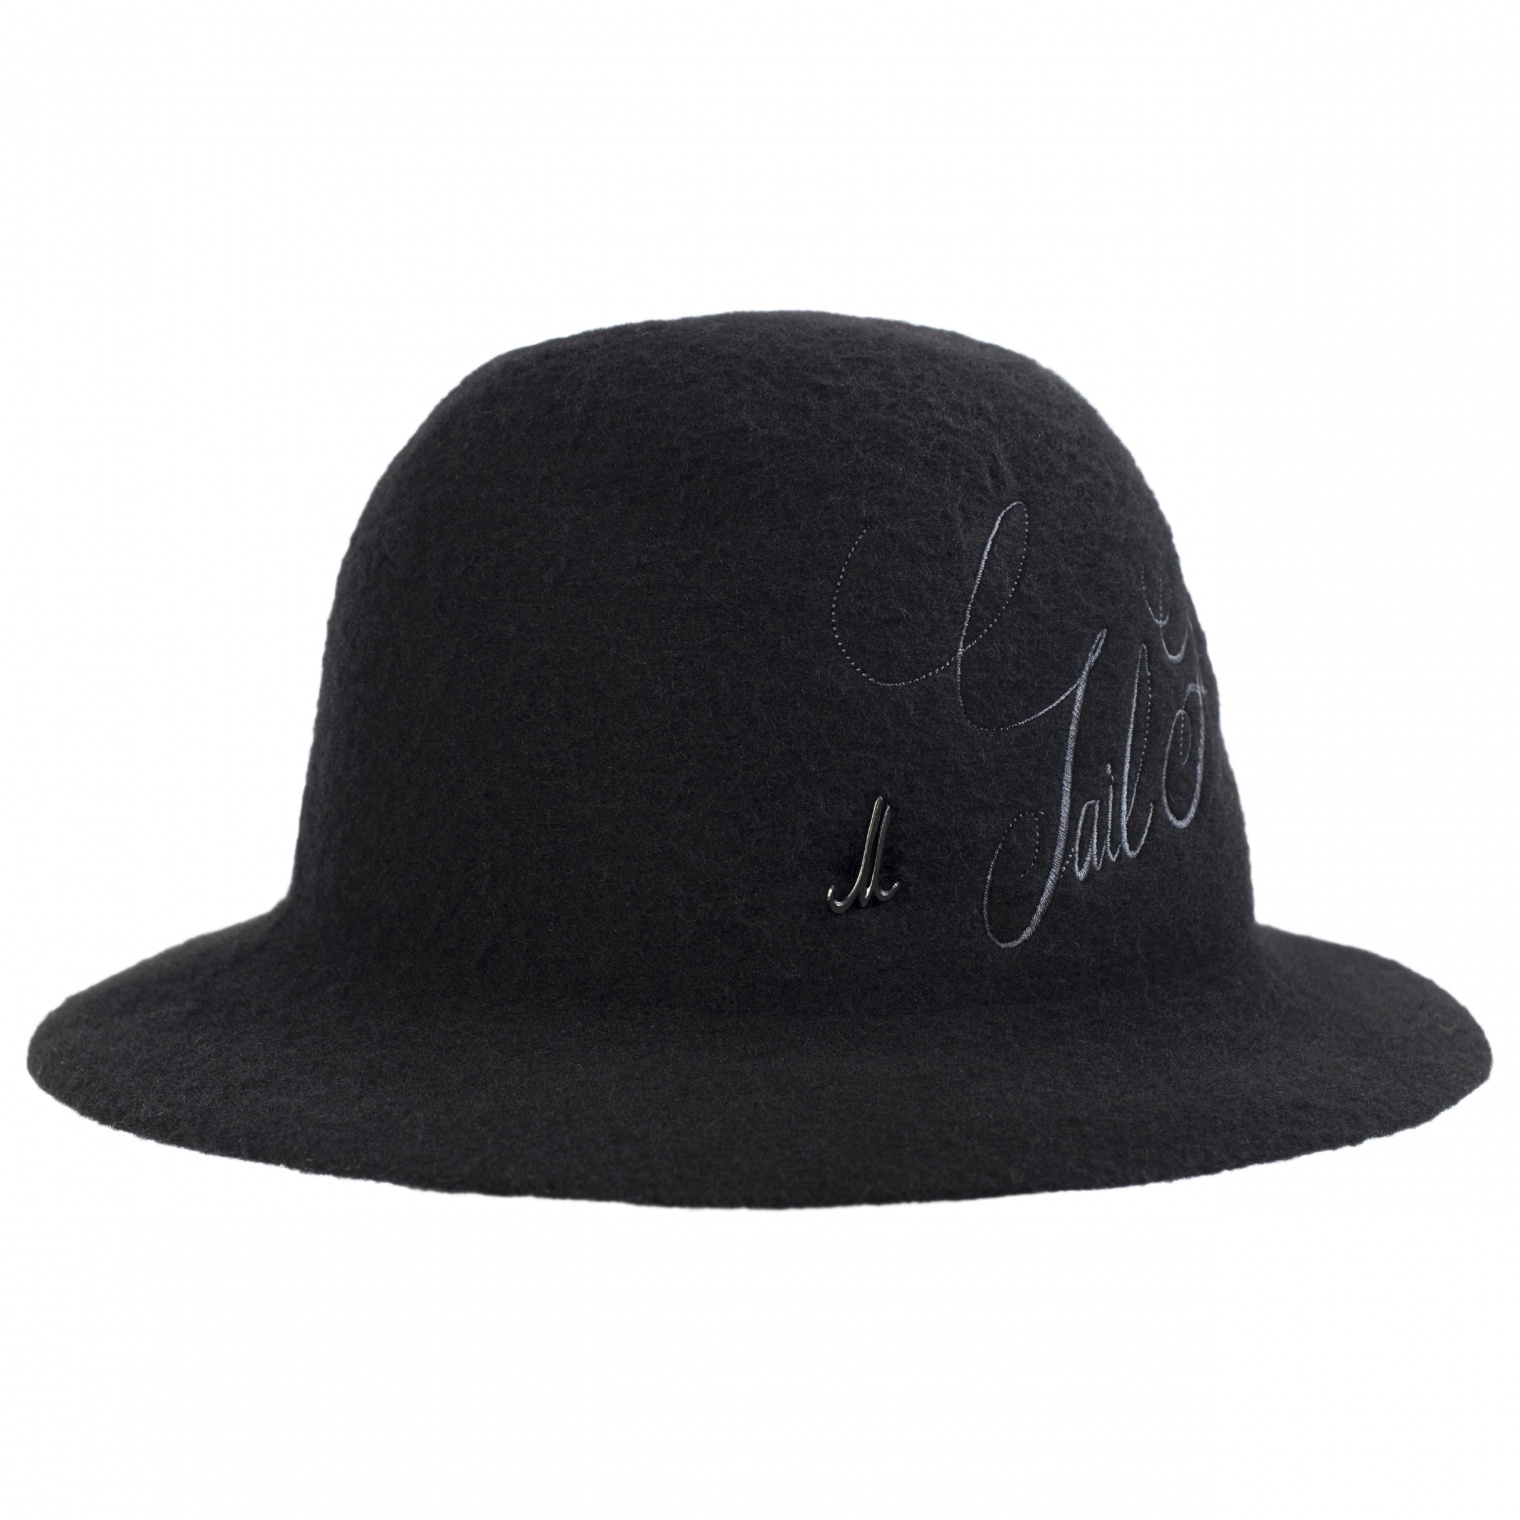 Junya Watanabe Embroidered logo hat in black